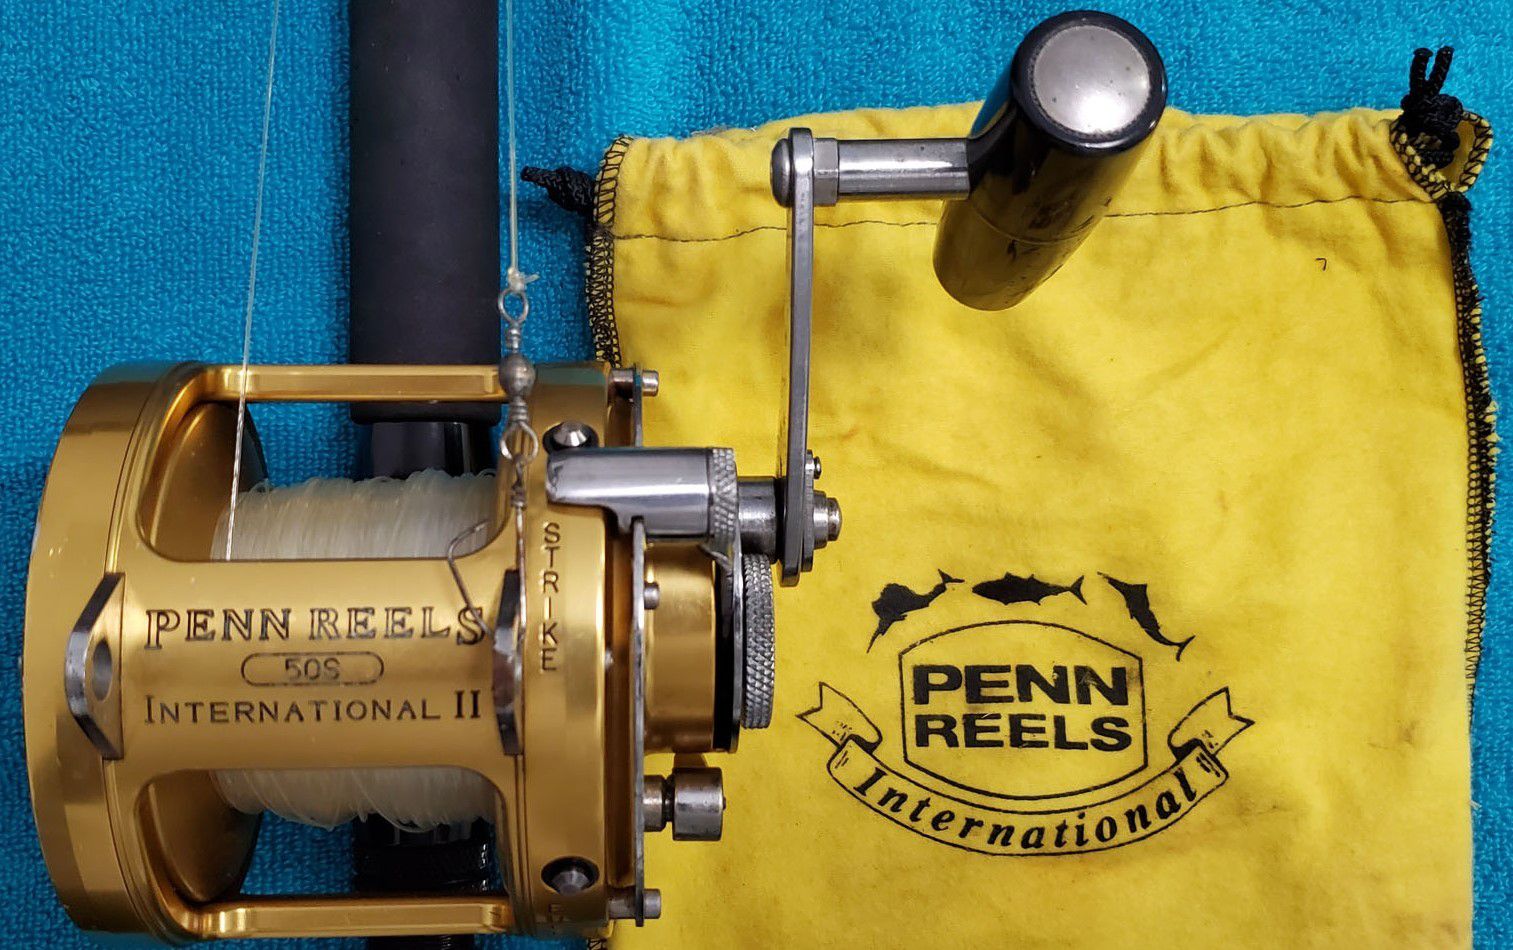 Penn Reels International II 50S - Two Speed – mounted on a RMS